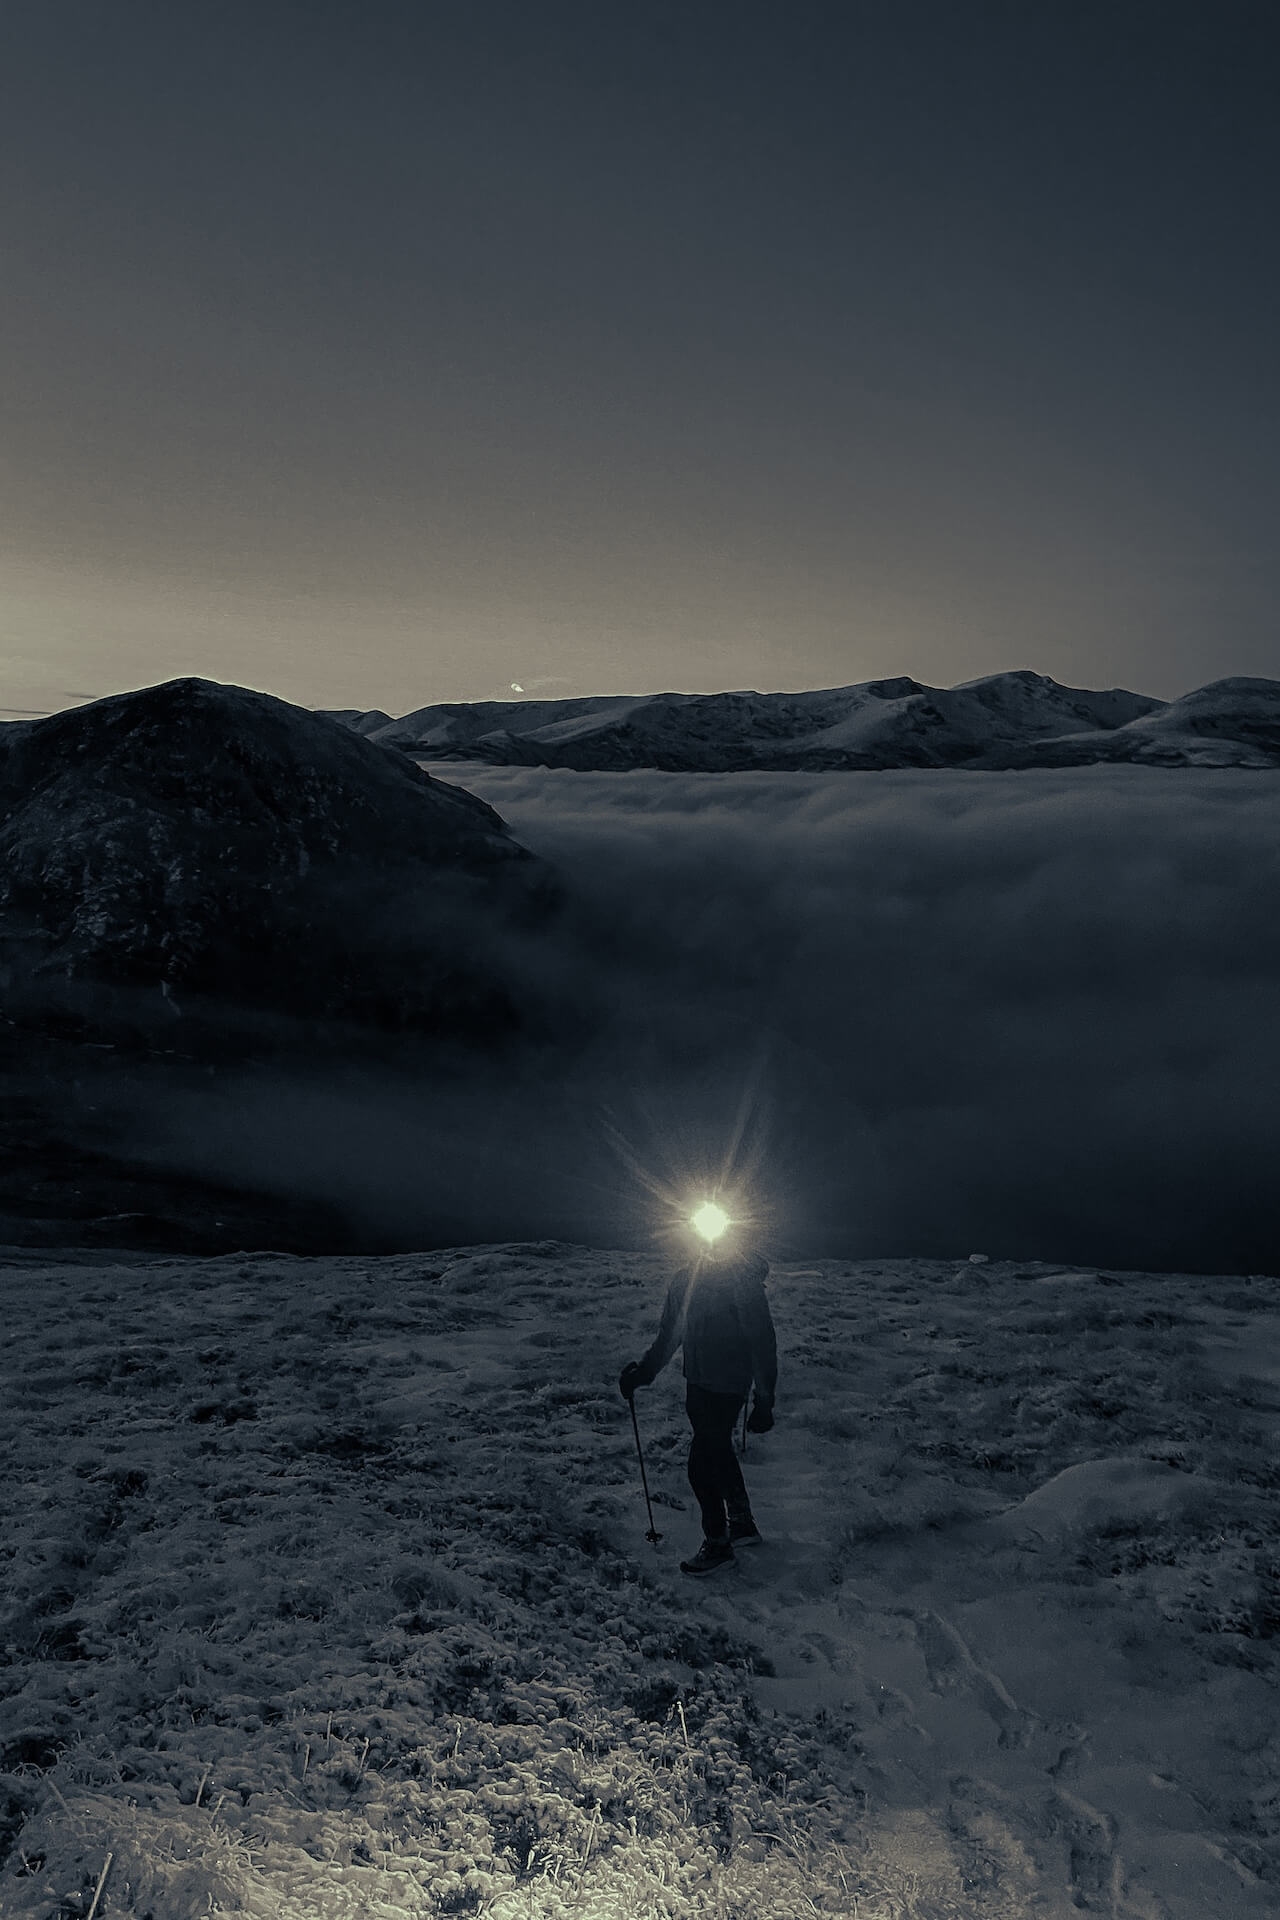 A member of the Studio Graft team climbing a mountain in the dark